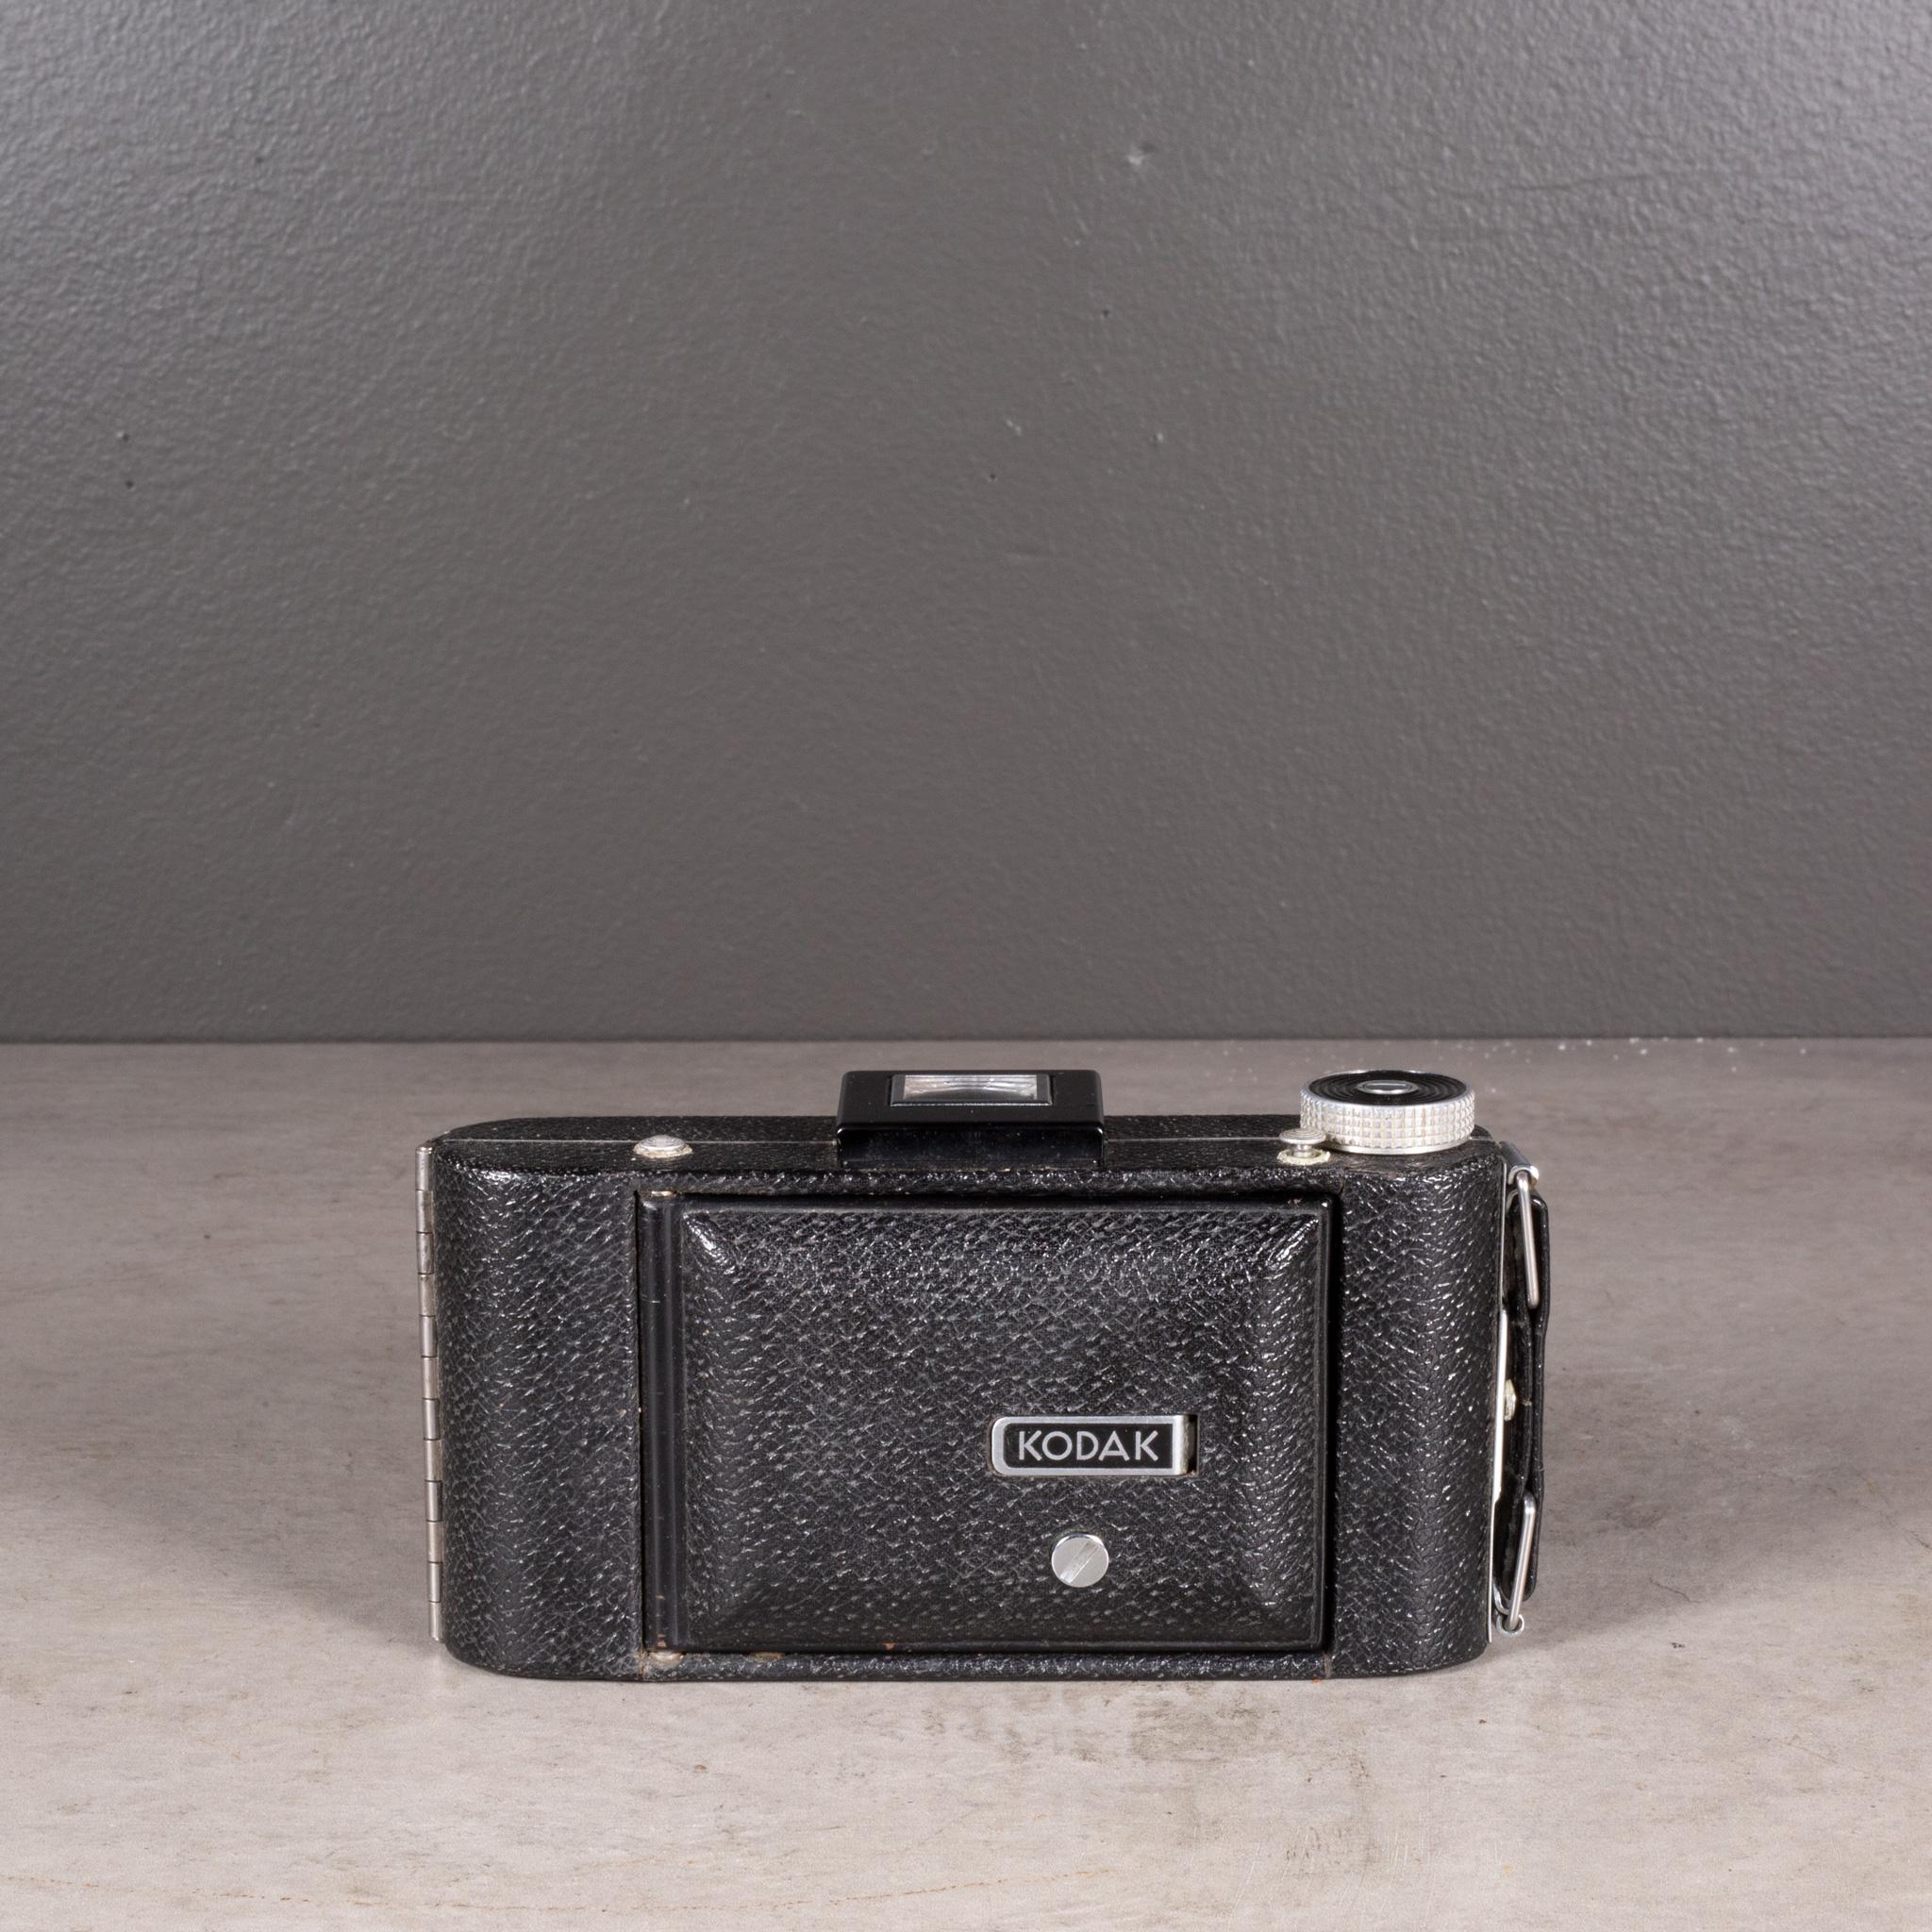 Eastman Kodak ancien appareil photo de poche « N° 1 Kodak » pliant c.1909-1920 en vente 1